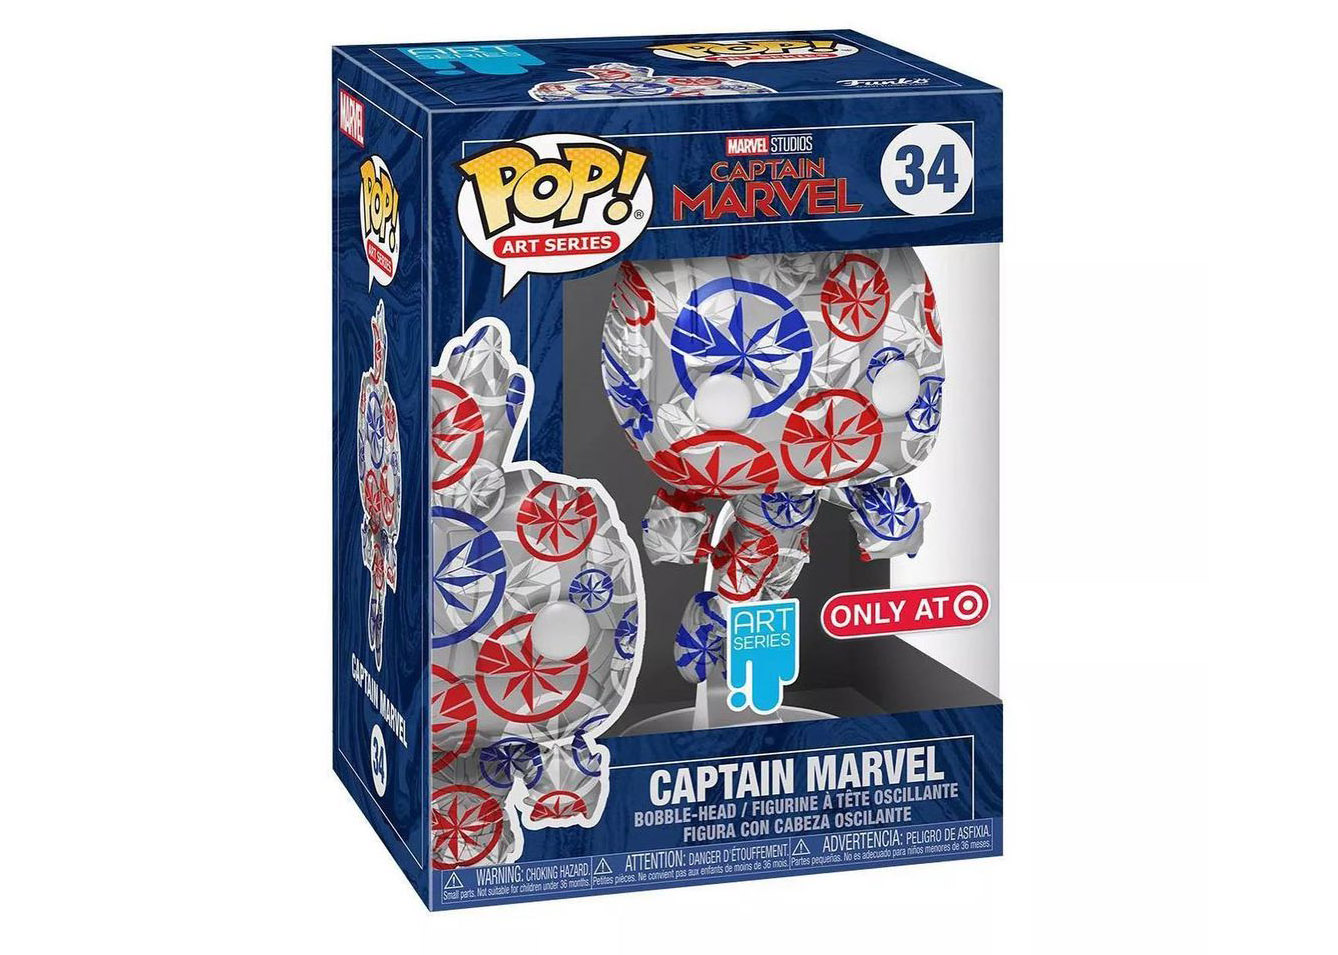 Funko Pop! Art Series Marvel Captain Marvel Target Exclusive